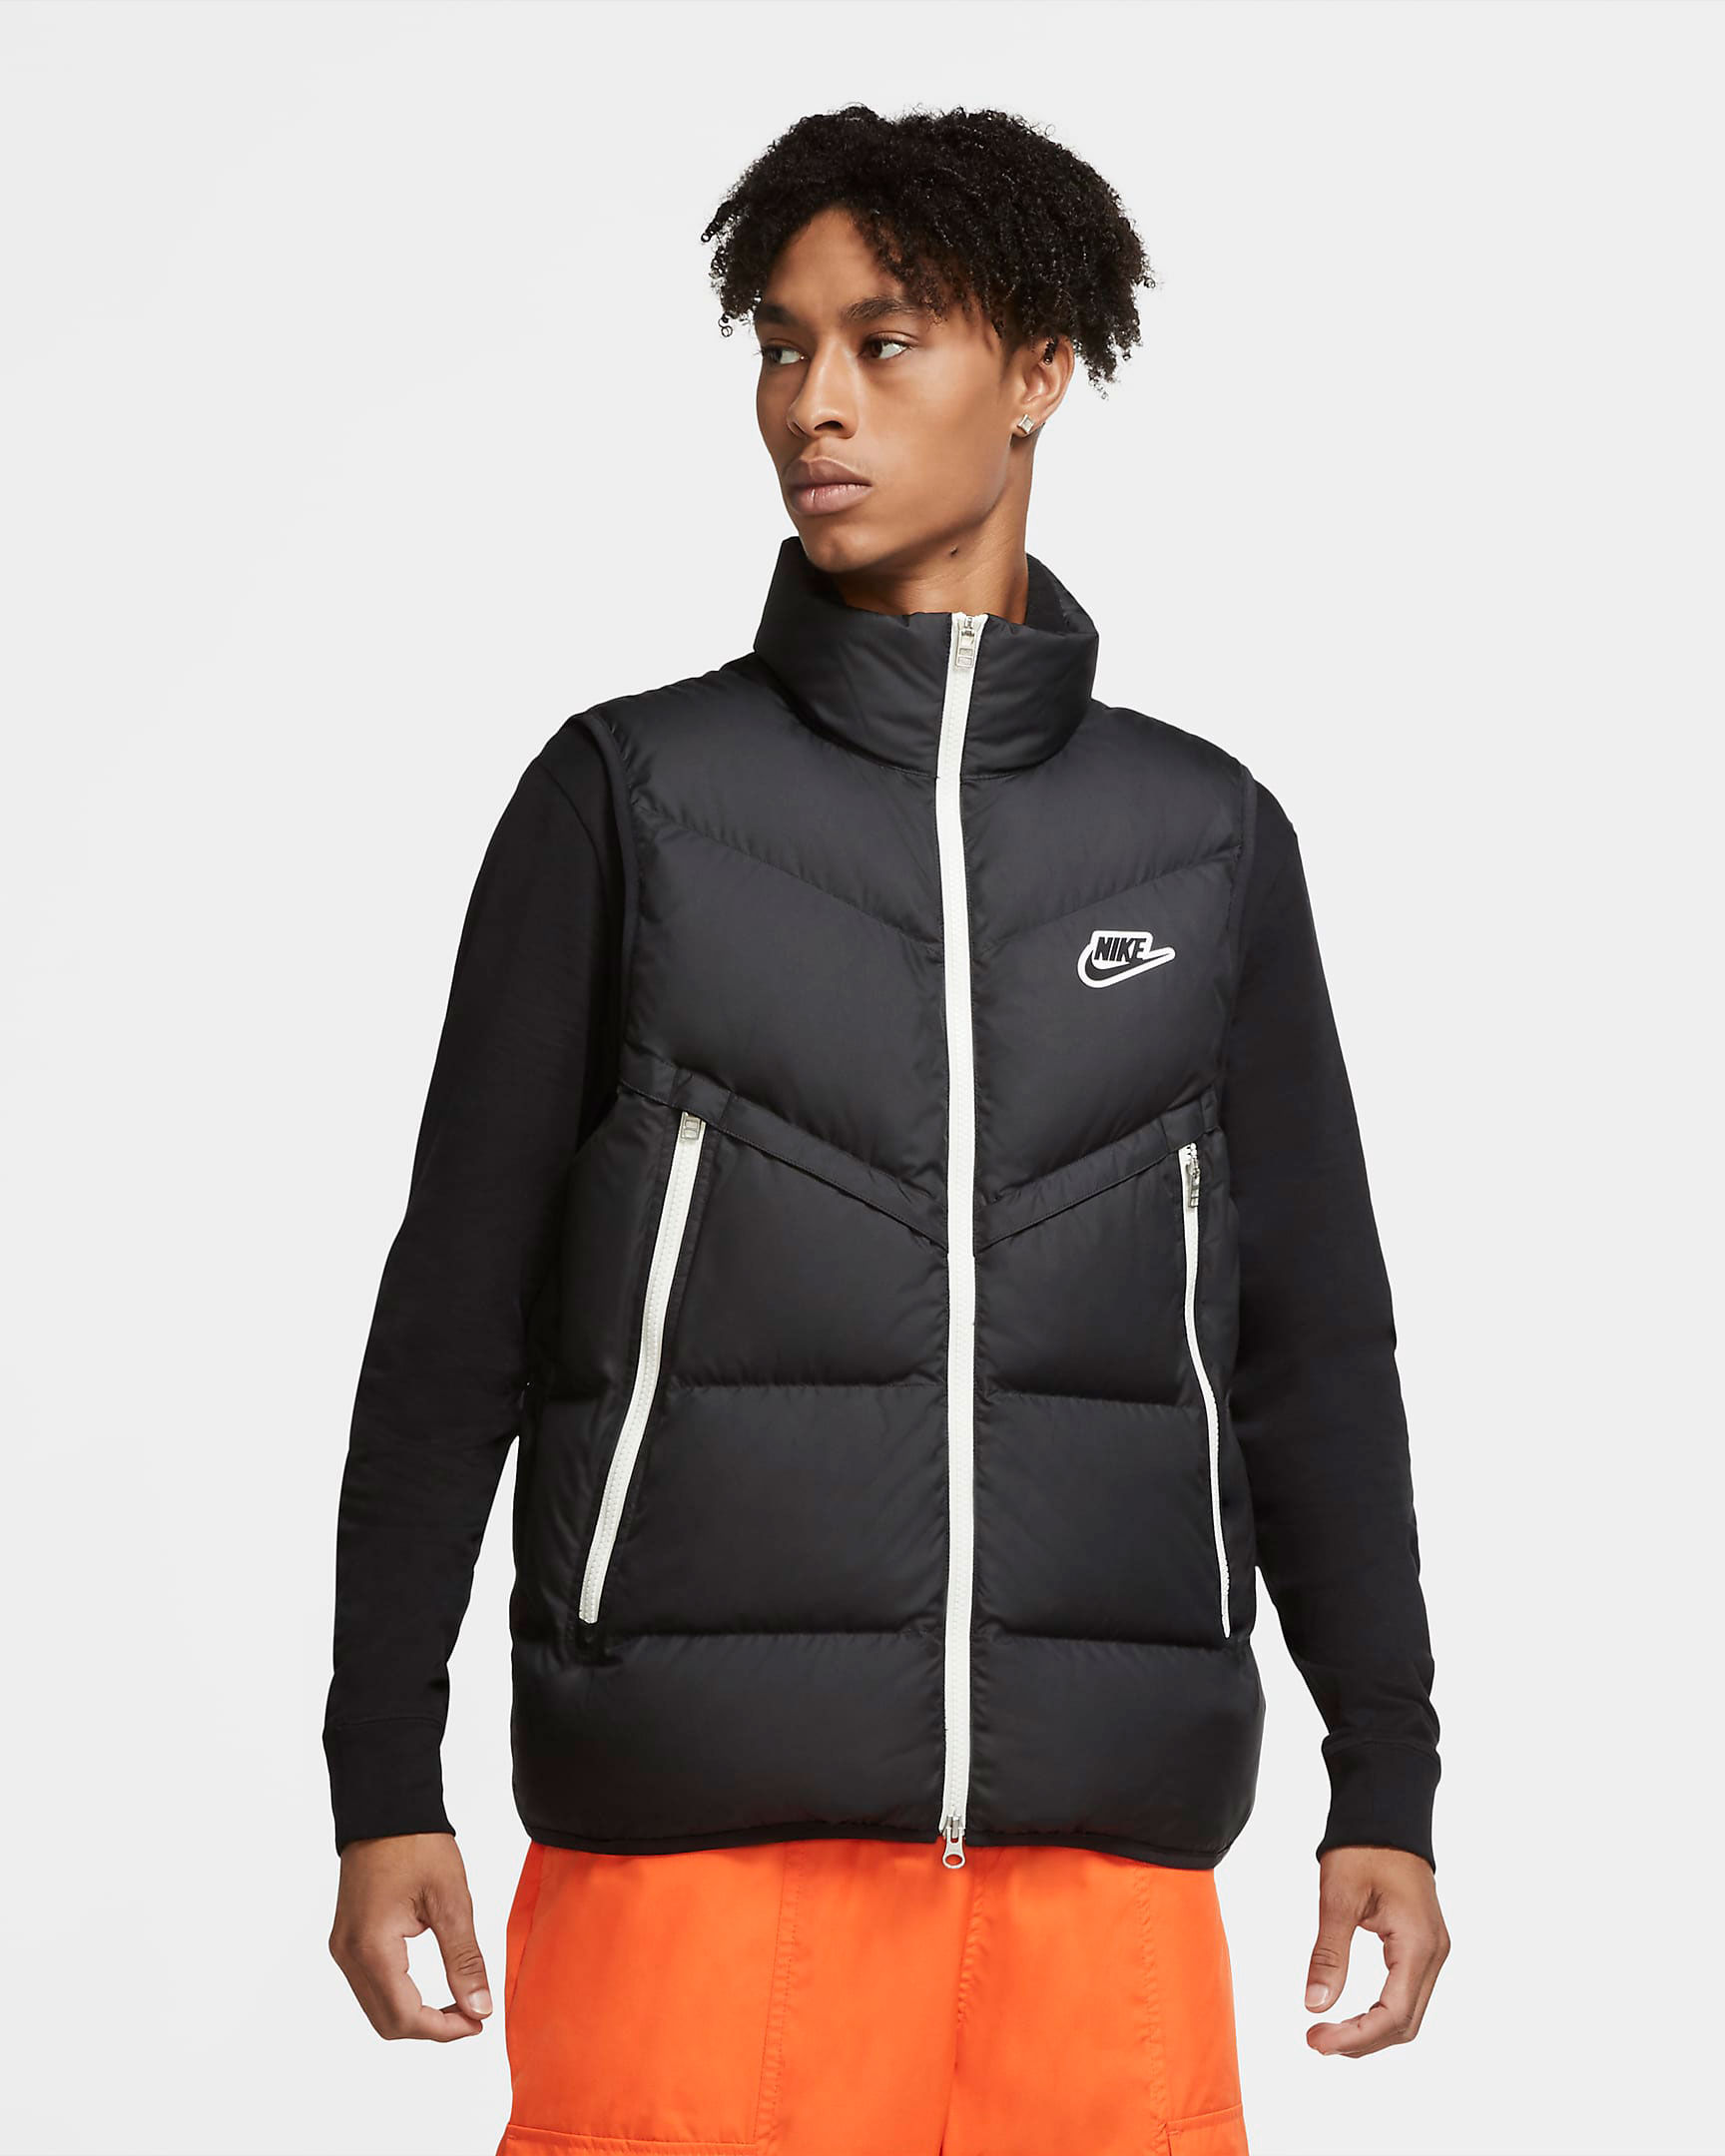 Jordan 1 Dark Mocha Nike Vest Jacket Outfit | SneakerFits.com